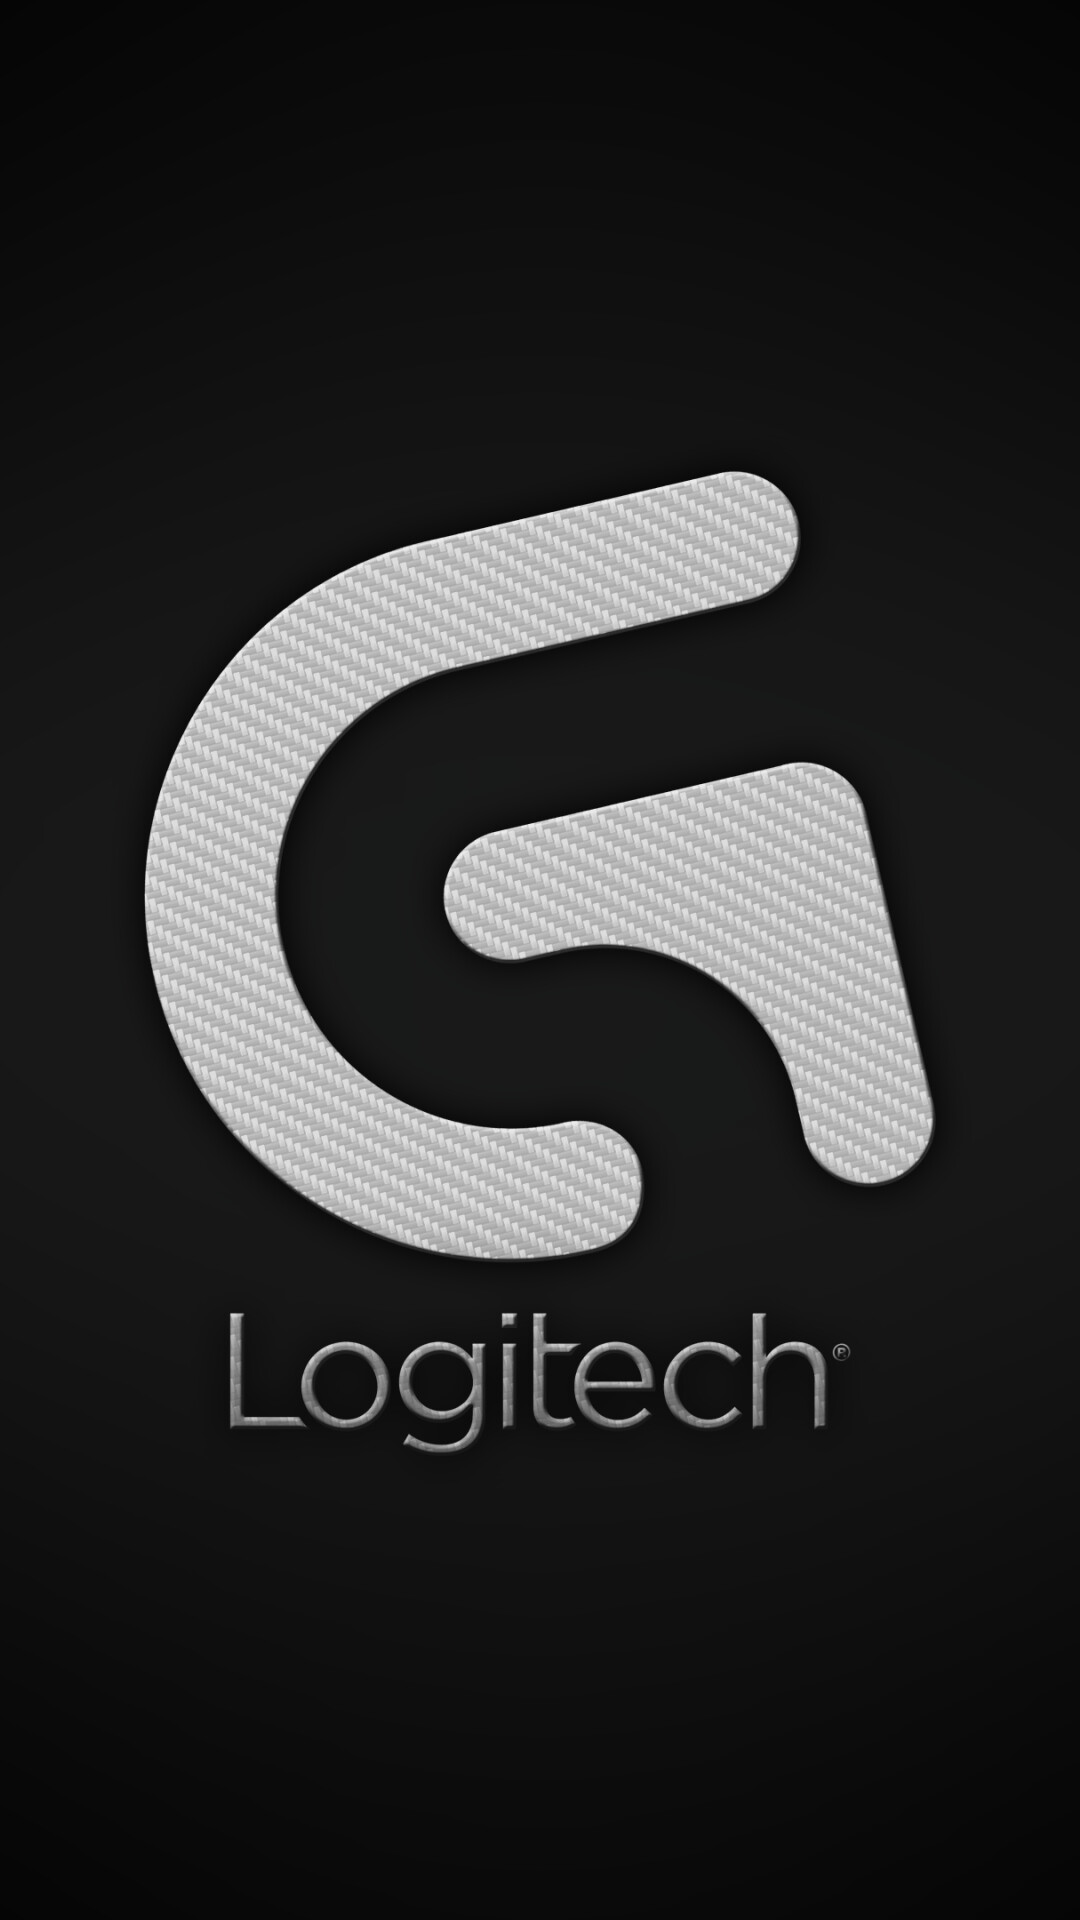 Logitech Marke, Hochwertiges Bild, Stilvolles Logo, Prominenter Einsatz, 1080x1920 Full HD Handy